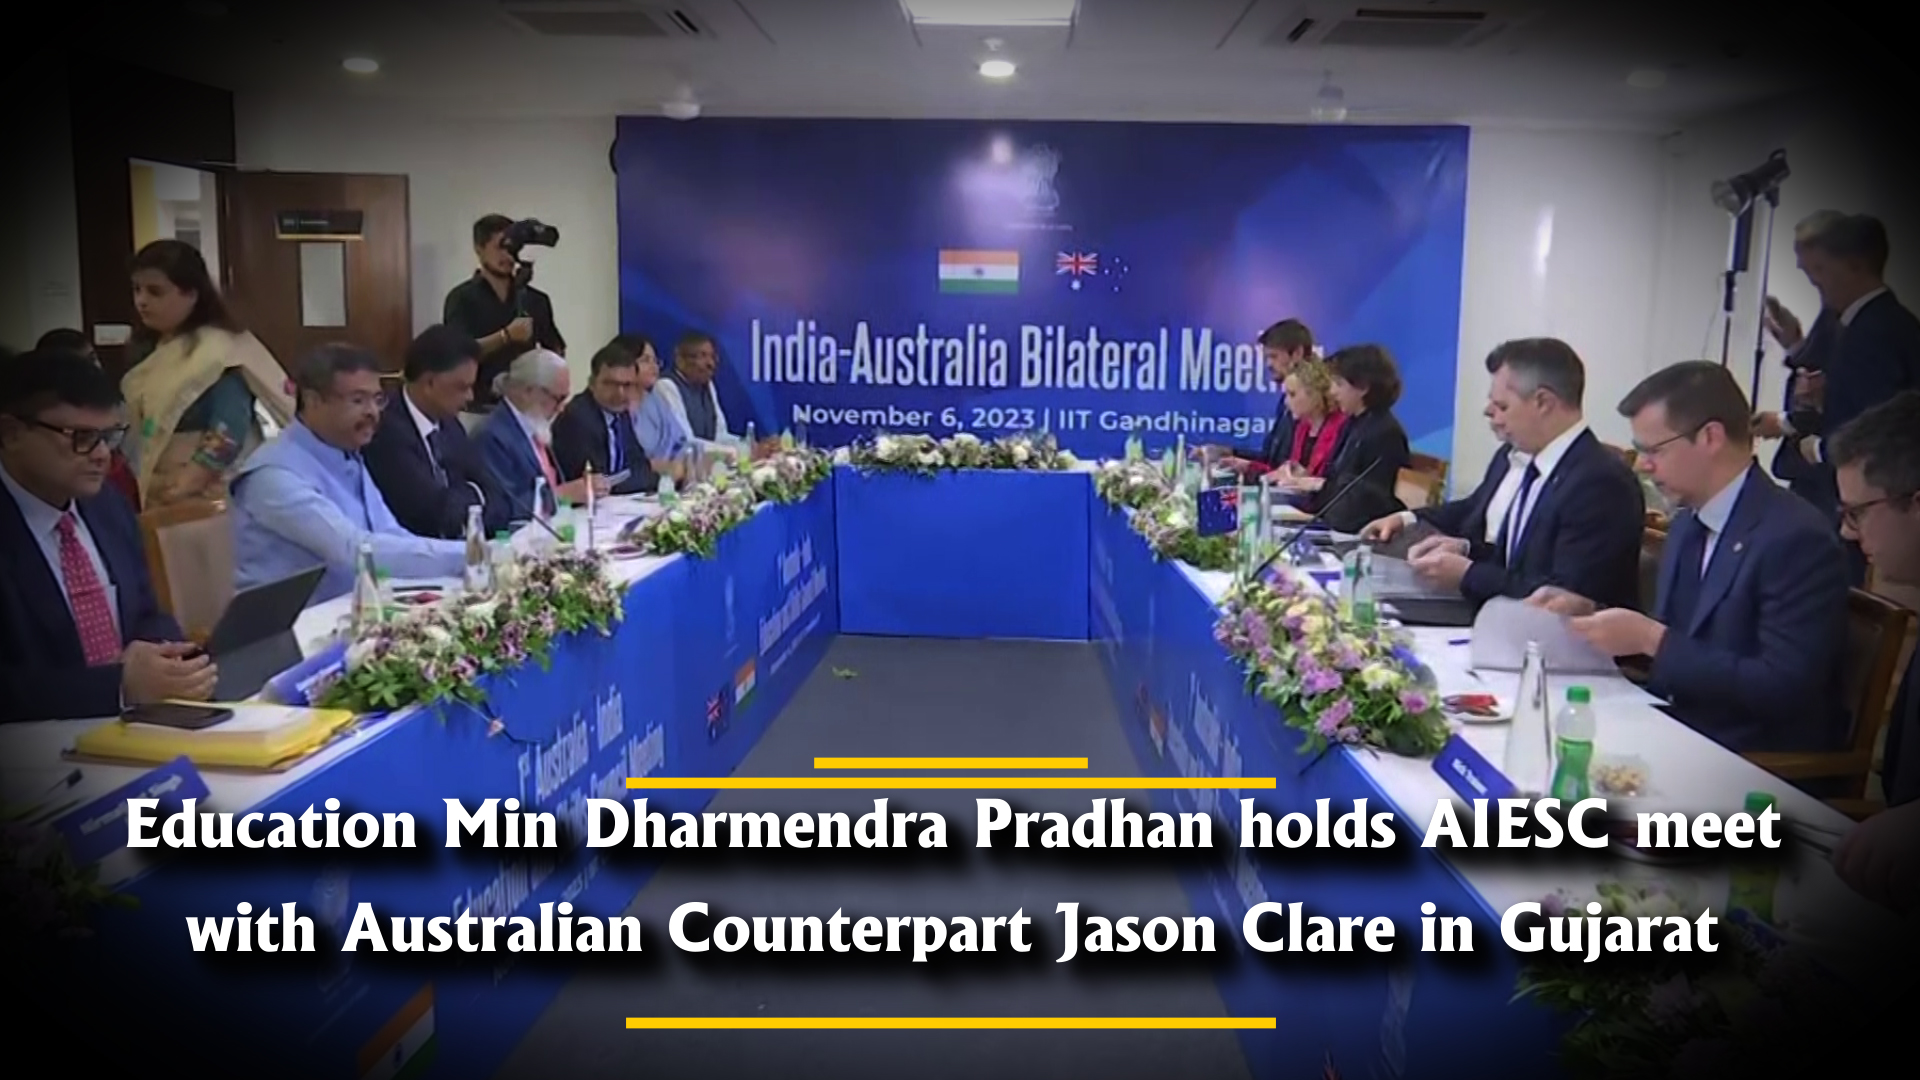 Education Min Dharmendra Pradhan holds AIESC meet with Australian Counterpart Jason Clare in Gujarat